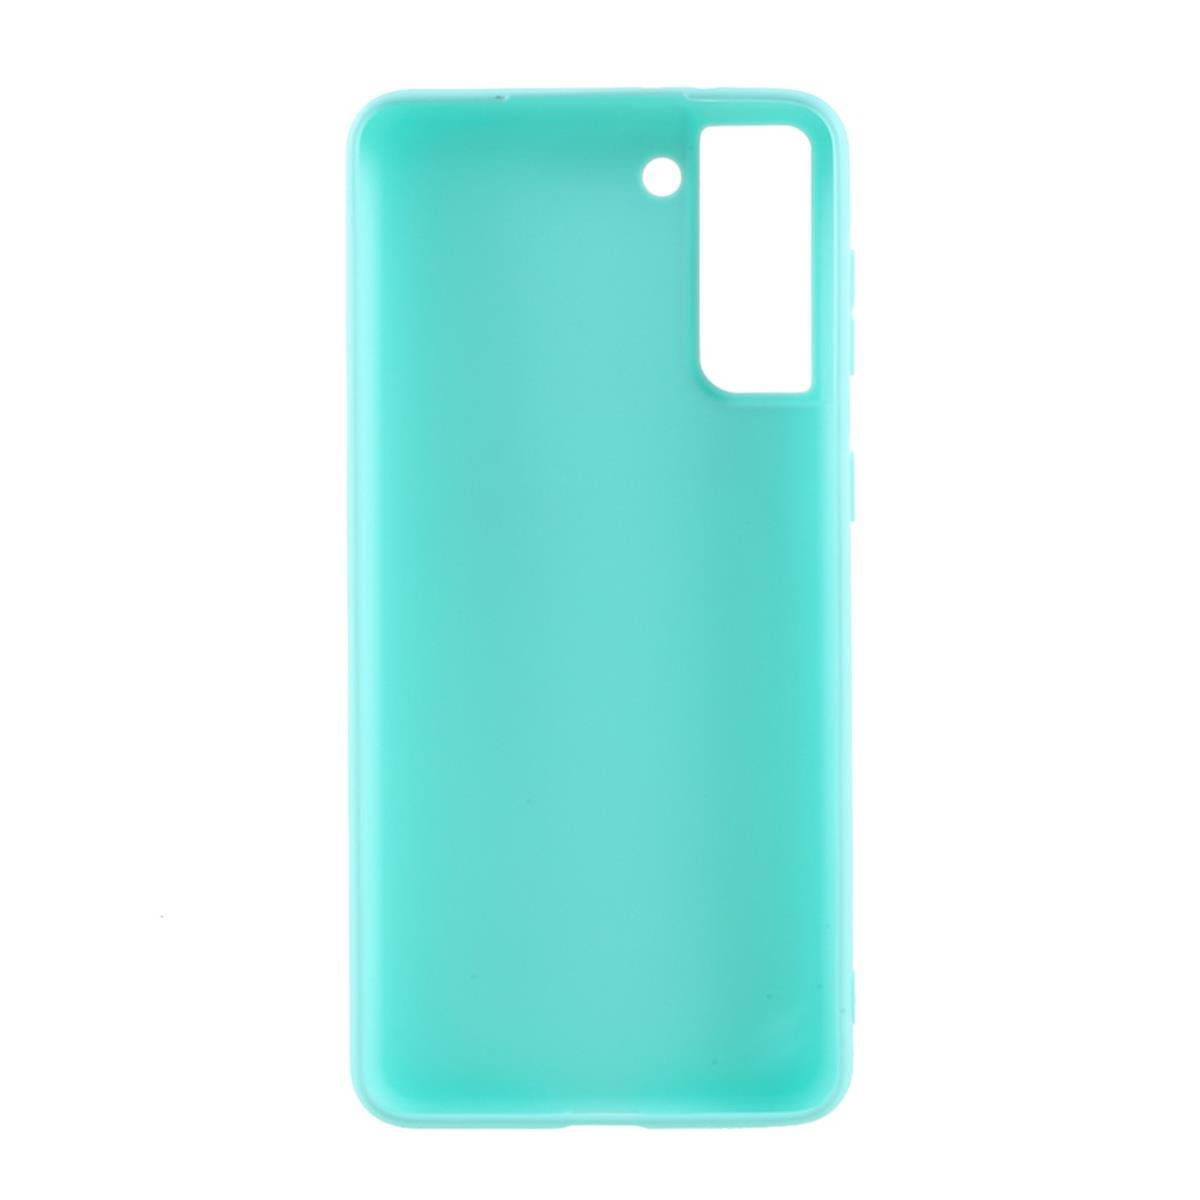 Hülle für Samsung Galaxy S21+ (Plus) Handyhülle Silikon Case Cover Schutzhülle Matt Grün